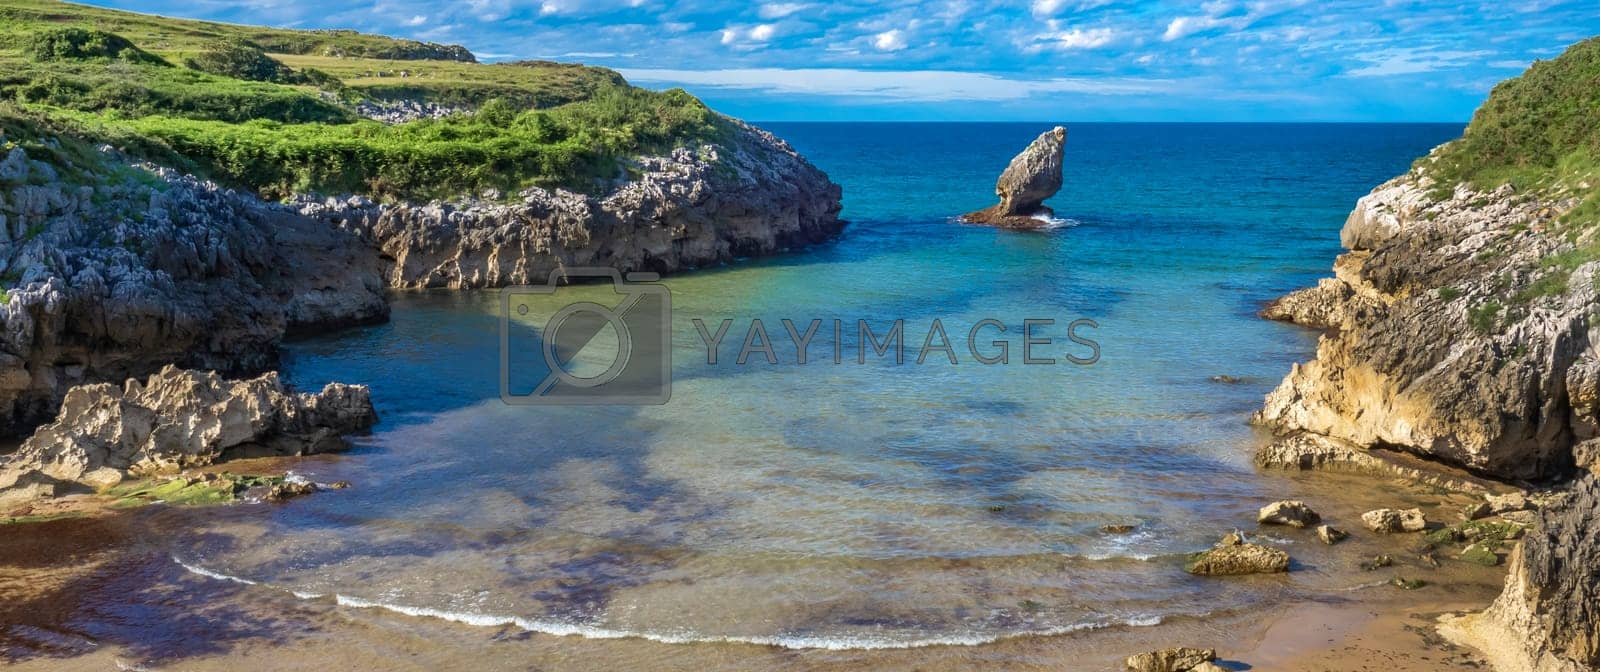 Royalty free image of Beach of Buelna, Buelna, Asturias, Spain by alcaproac